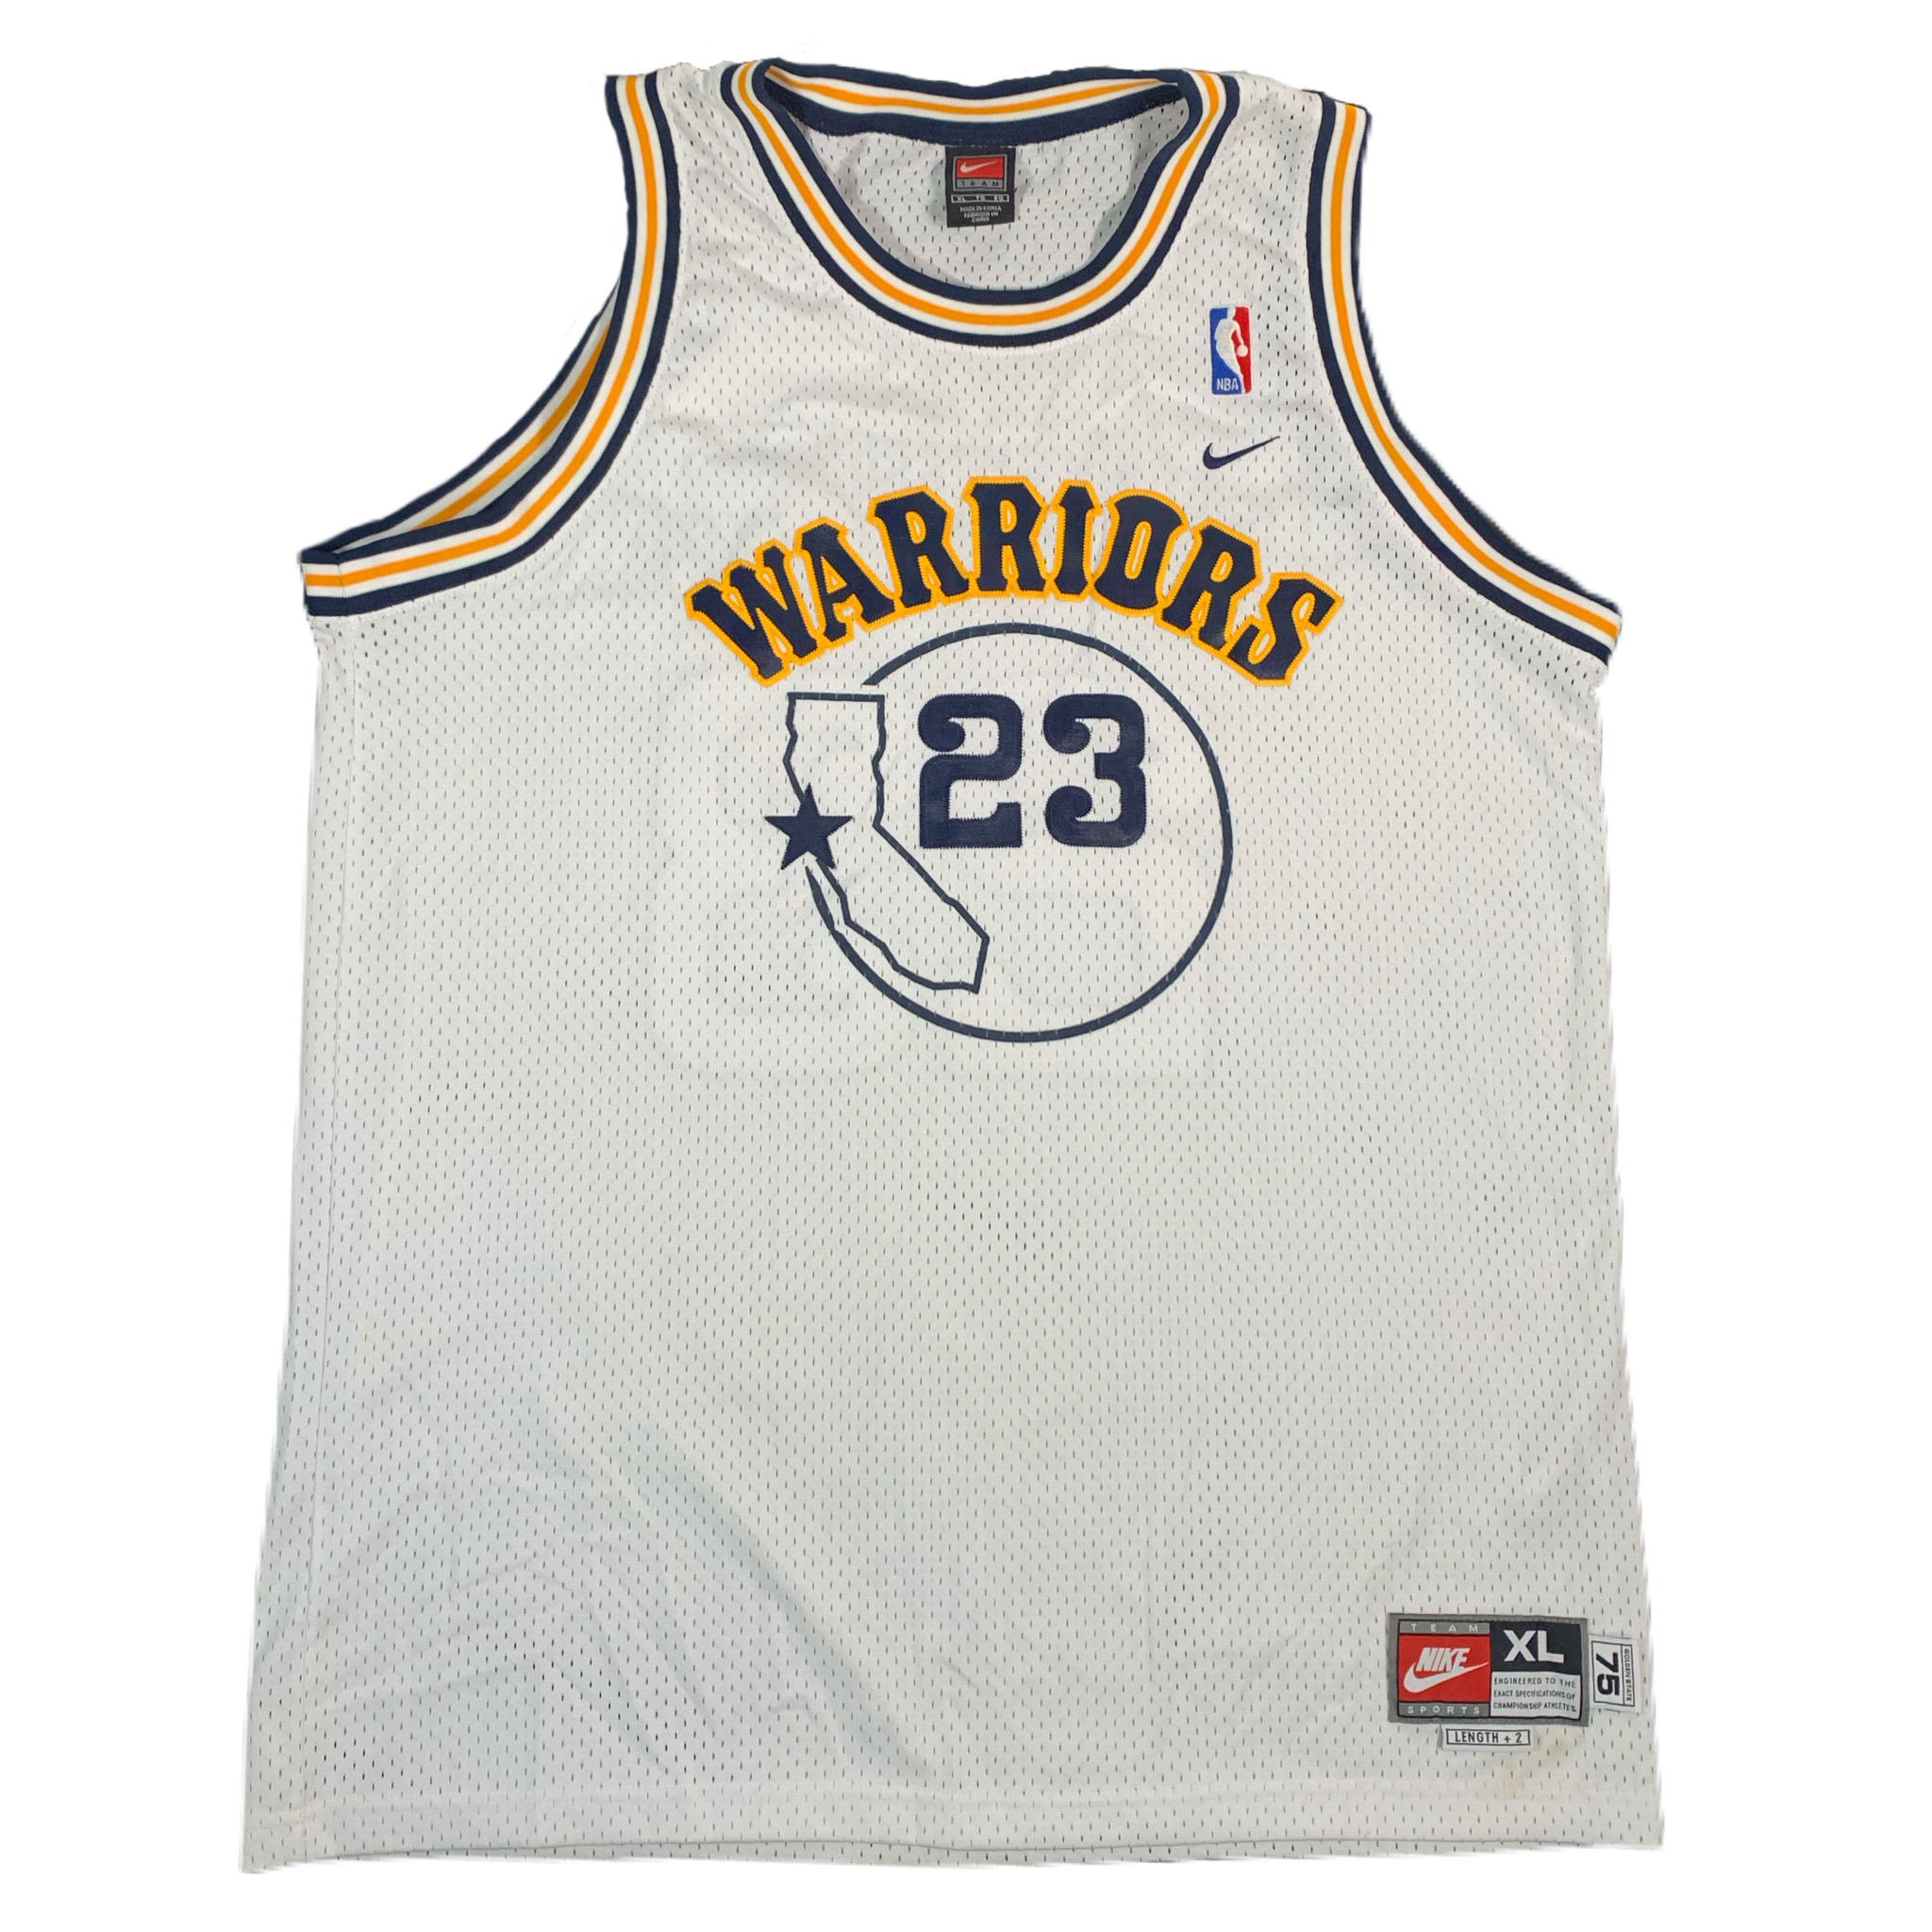 Vintage Nike Golden State Warriors “Jason Richardson” Basketball